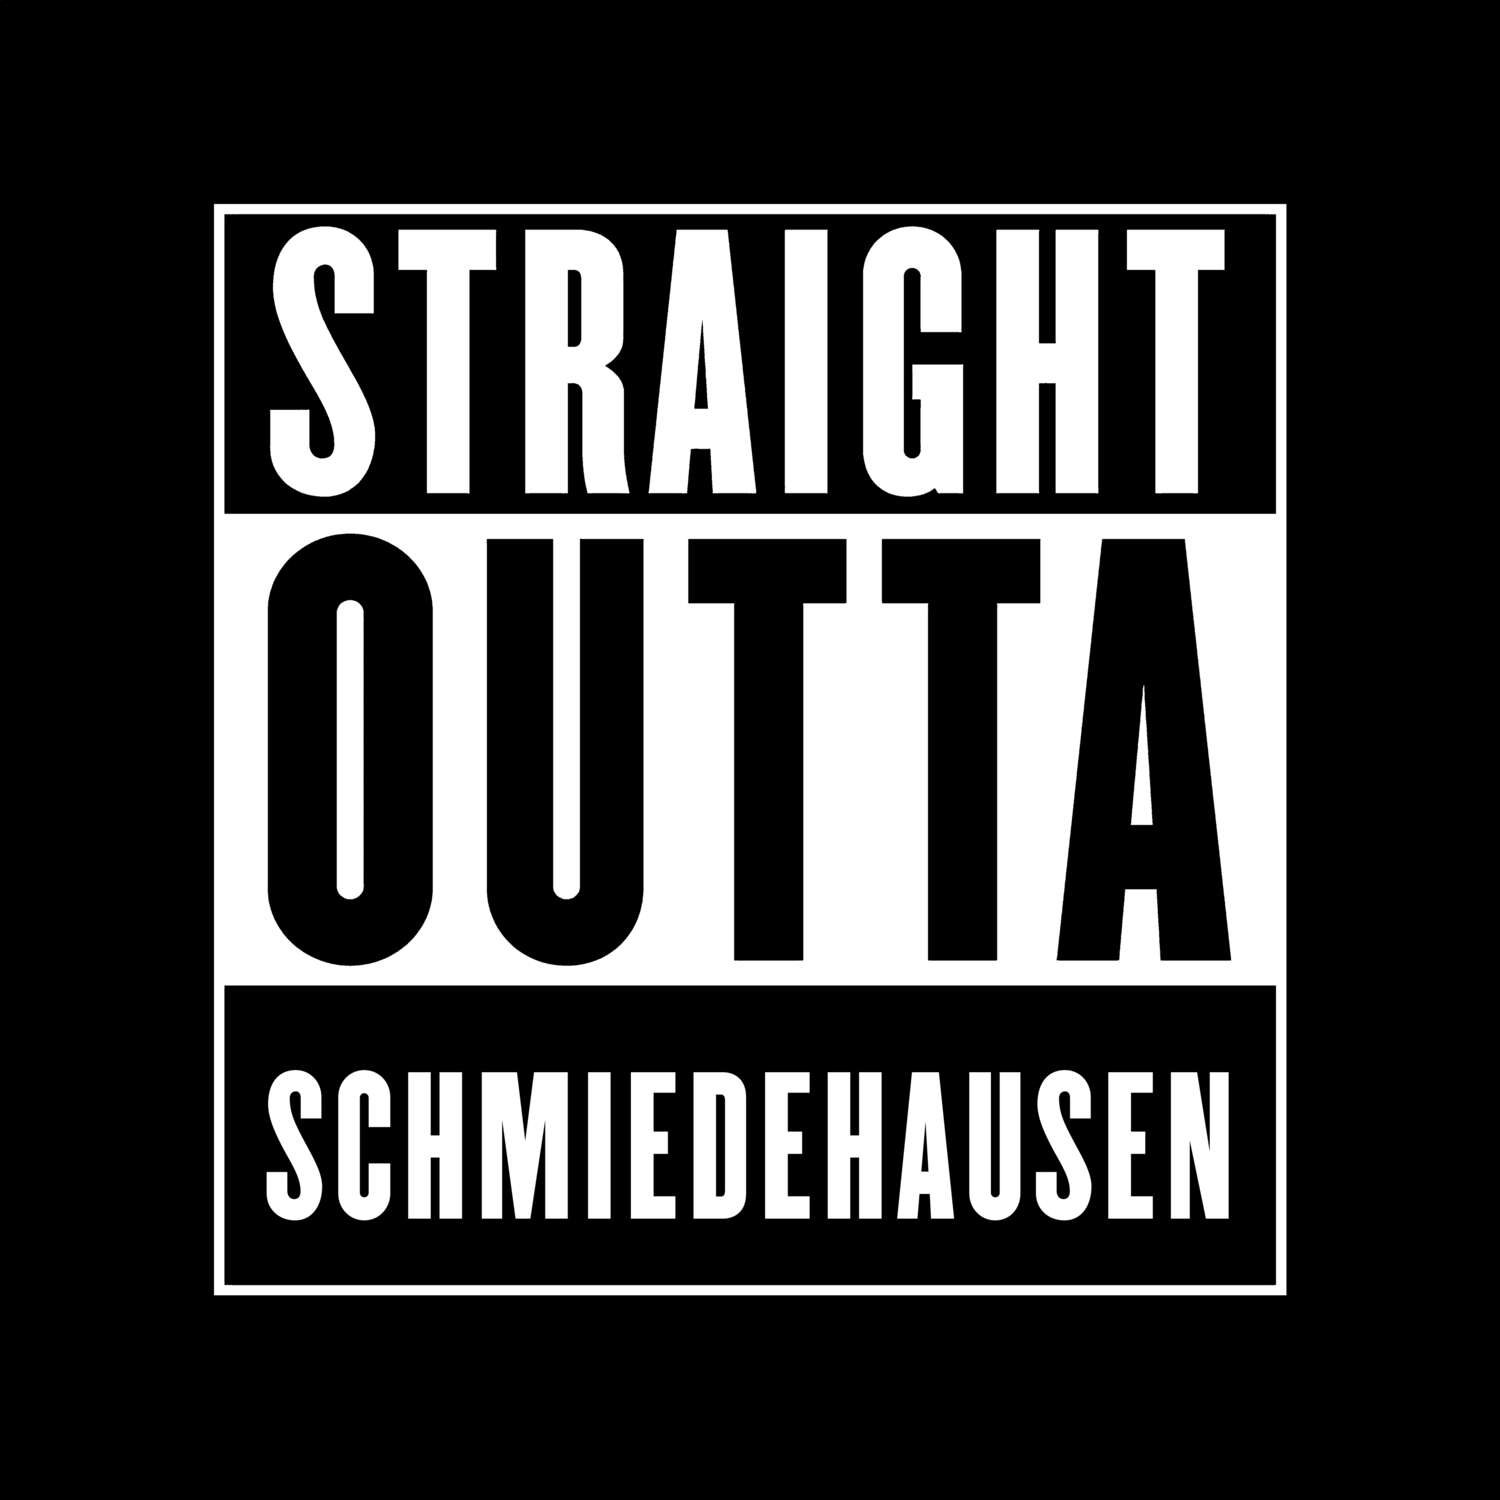 Schmiedehausen T-Shirt »Straight Outta«